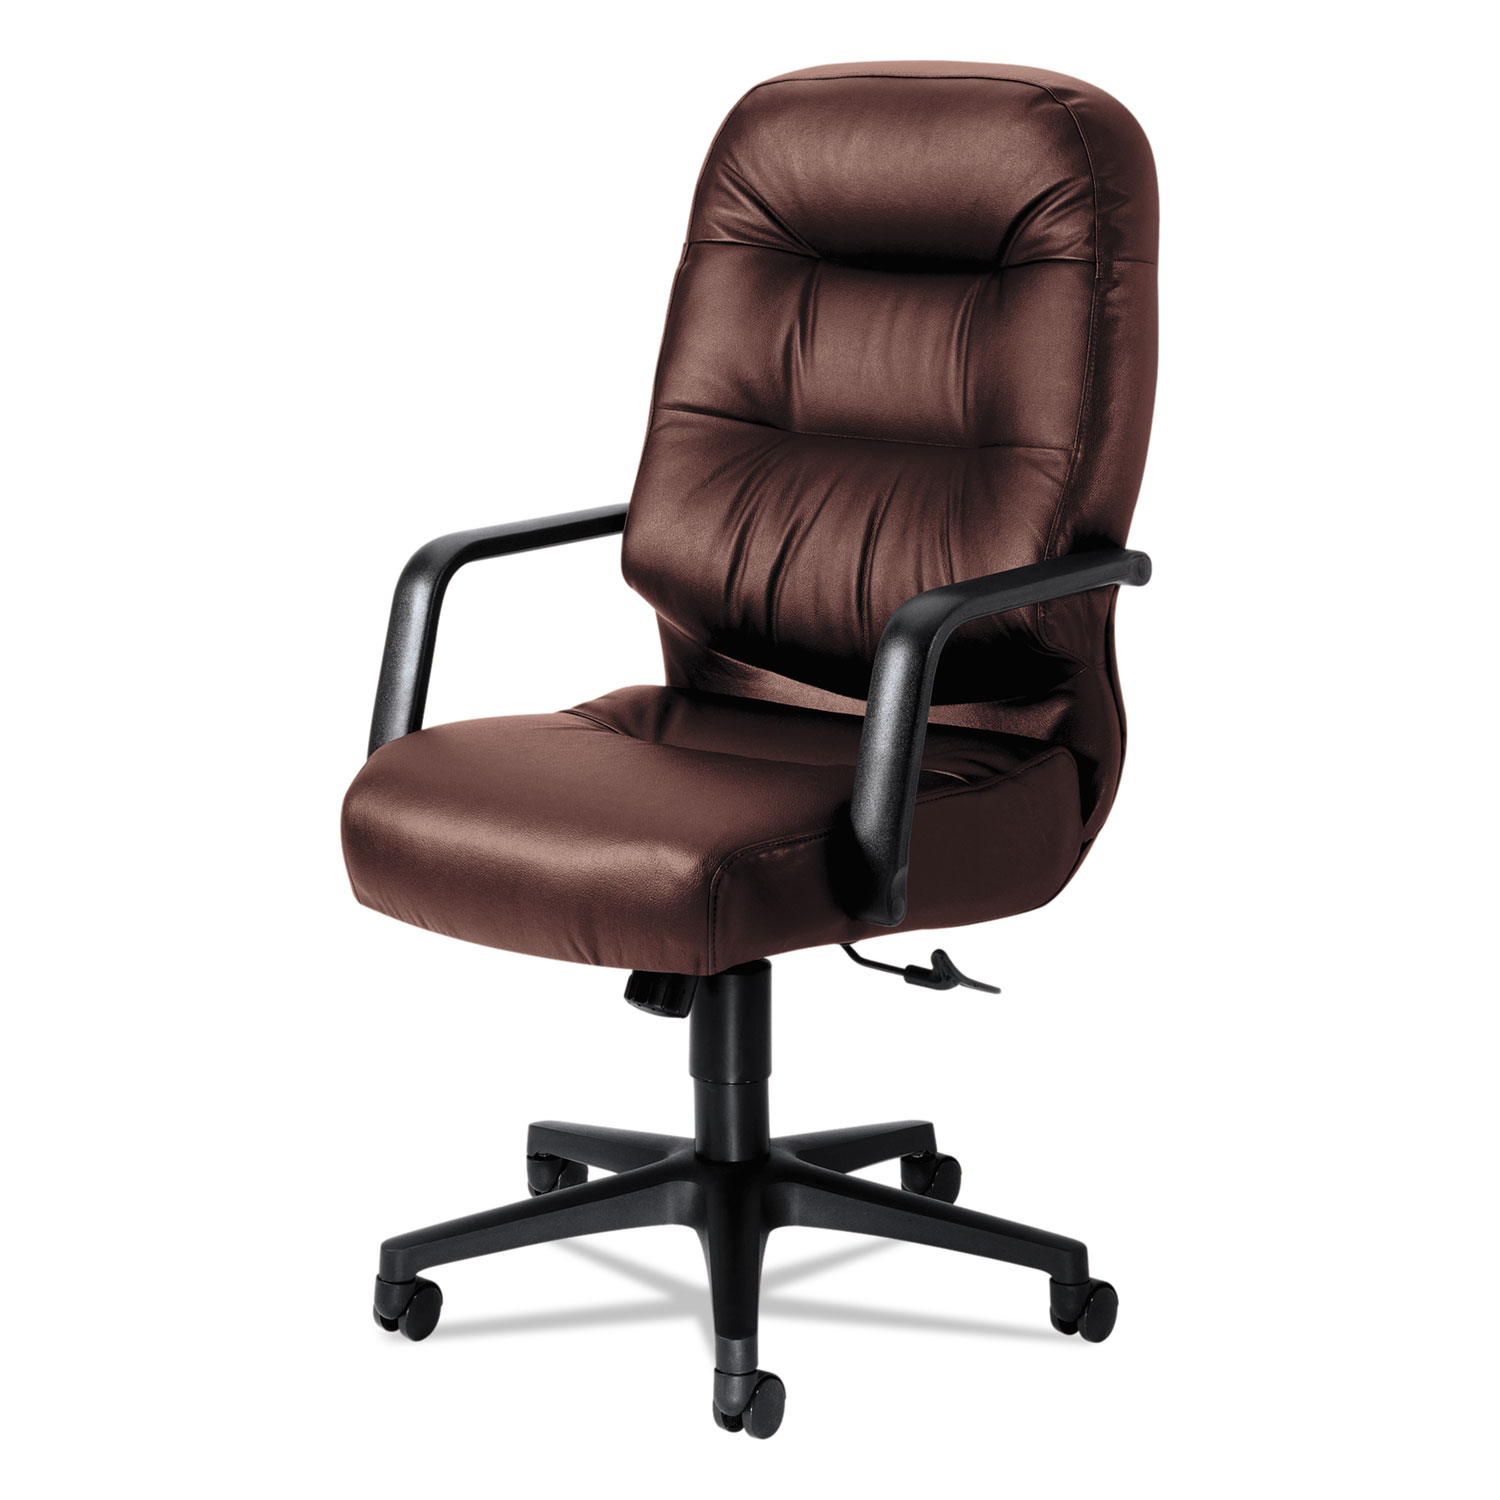  HON H2091.H.SR69.T Pillow-Soft 2090 Series Executive High-Back Swivel/Tilt Chair, Supports up to 300 lbs., Burgundy Seat/Back, Black Base (HON2091SR69T) 